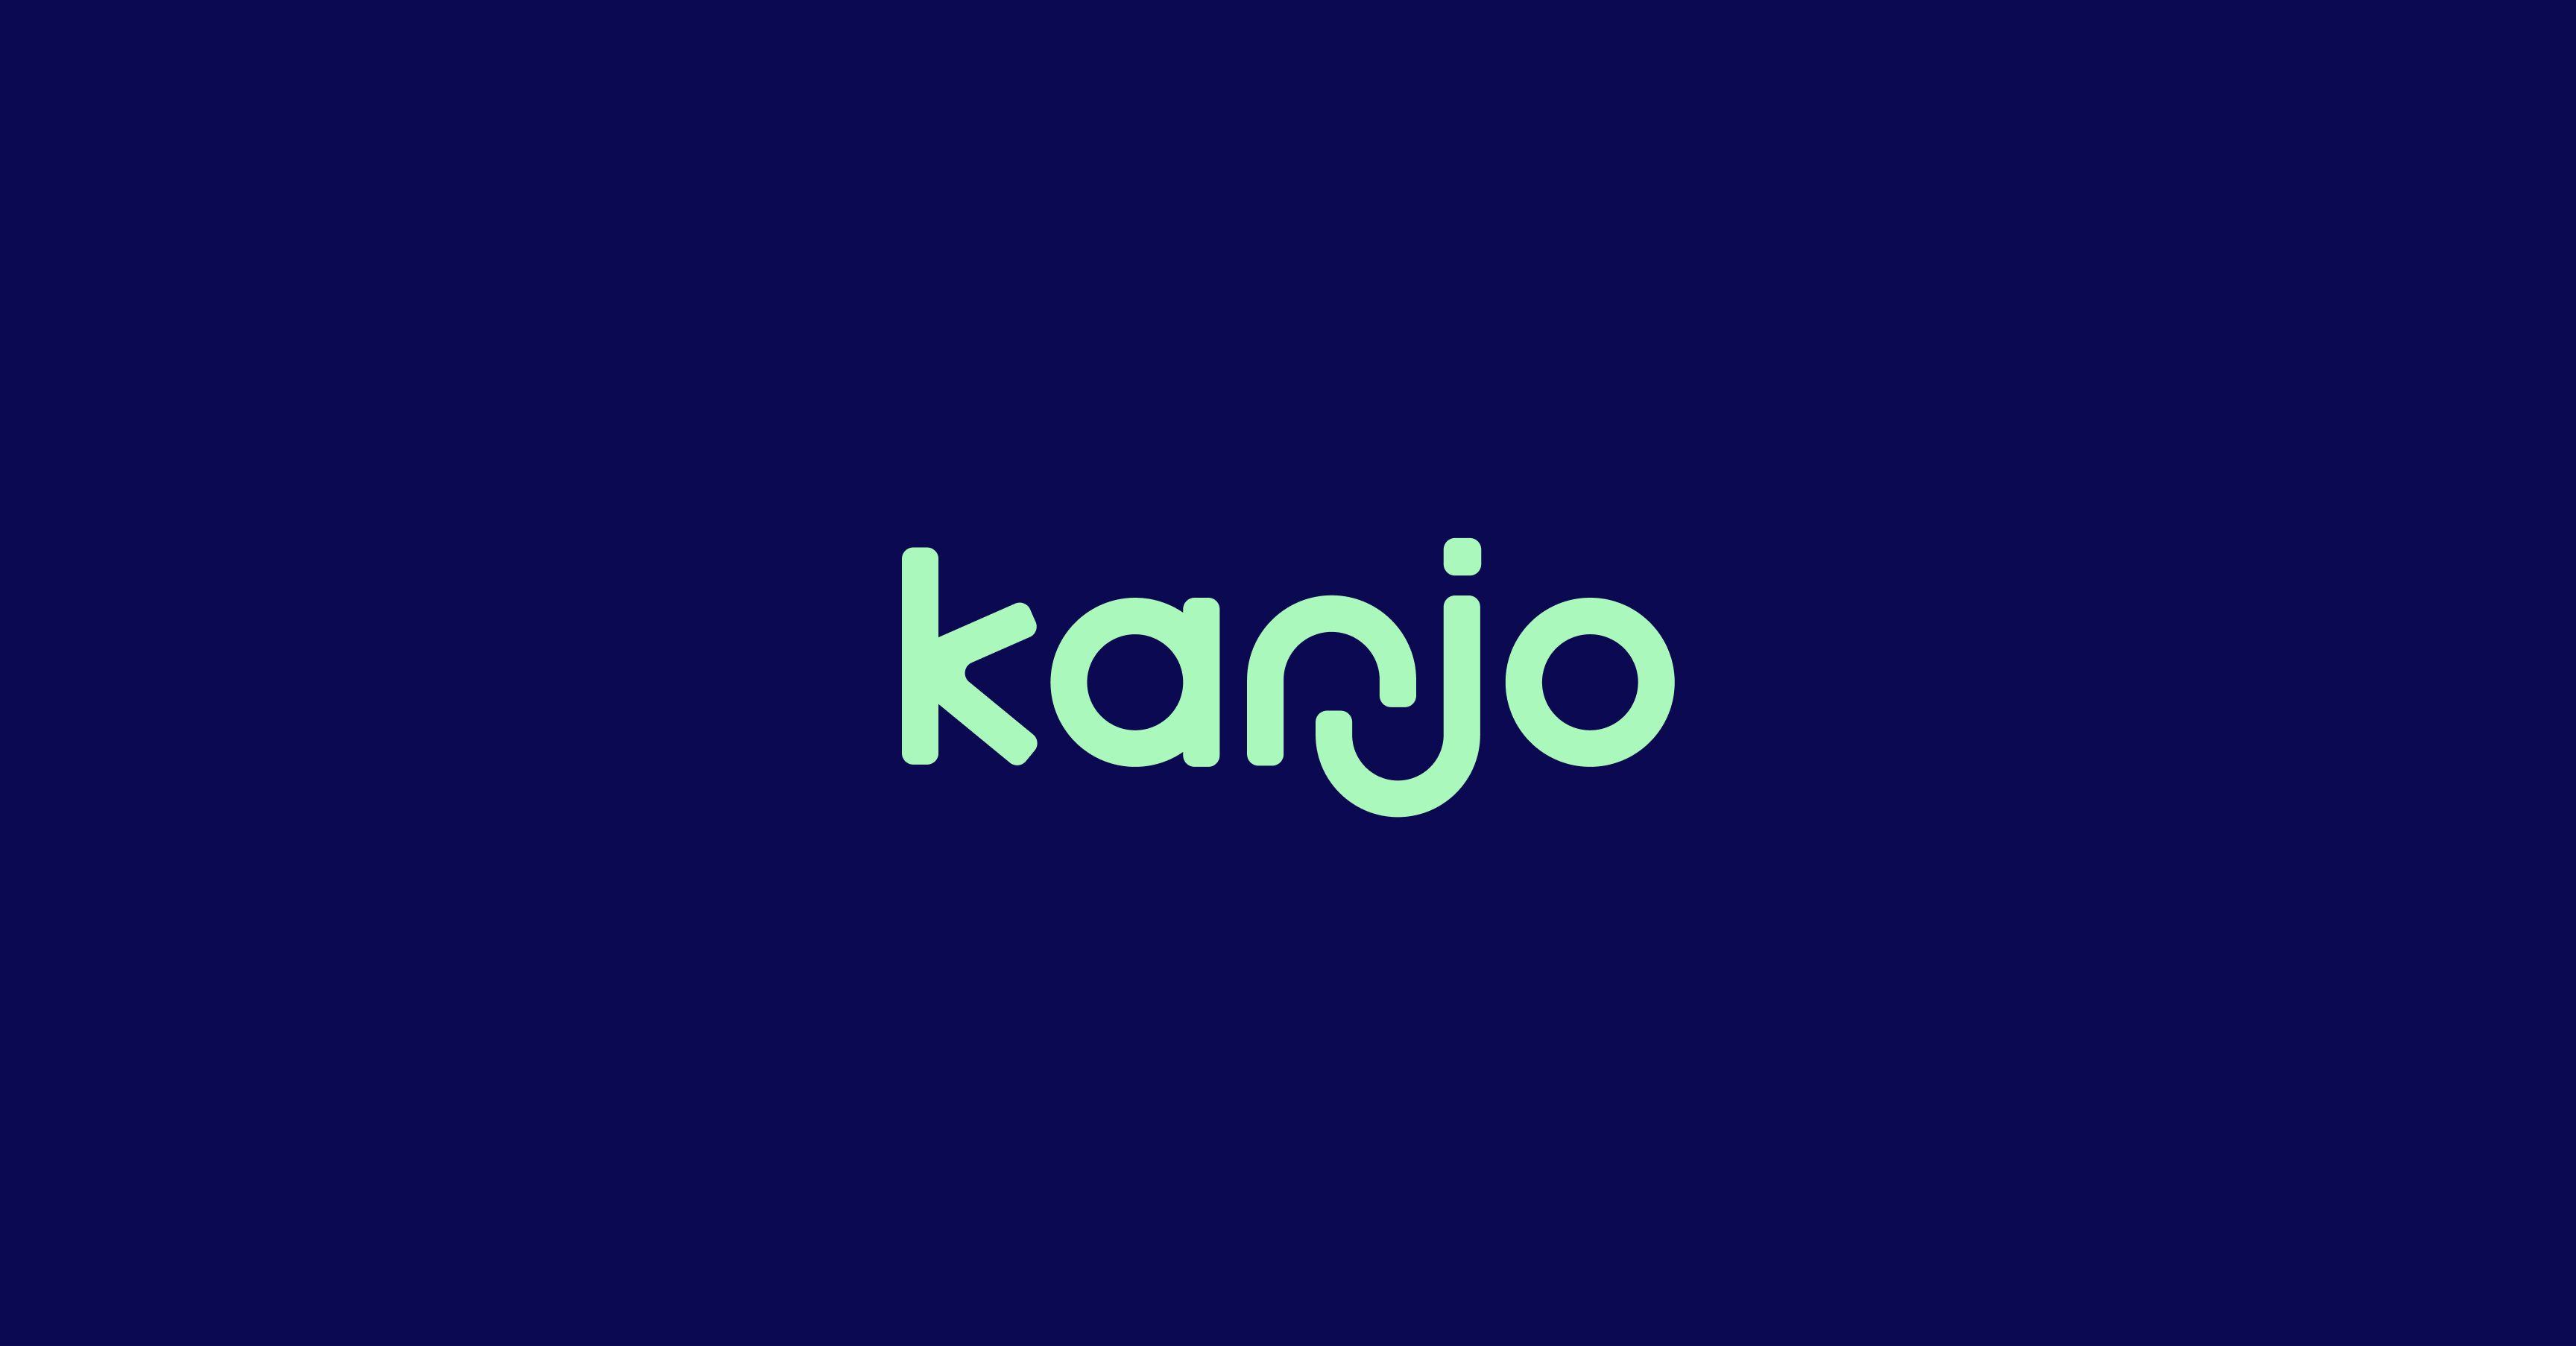 Kanjo games for kids rebranding logo